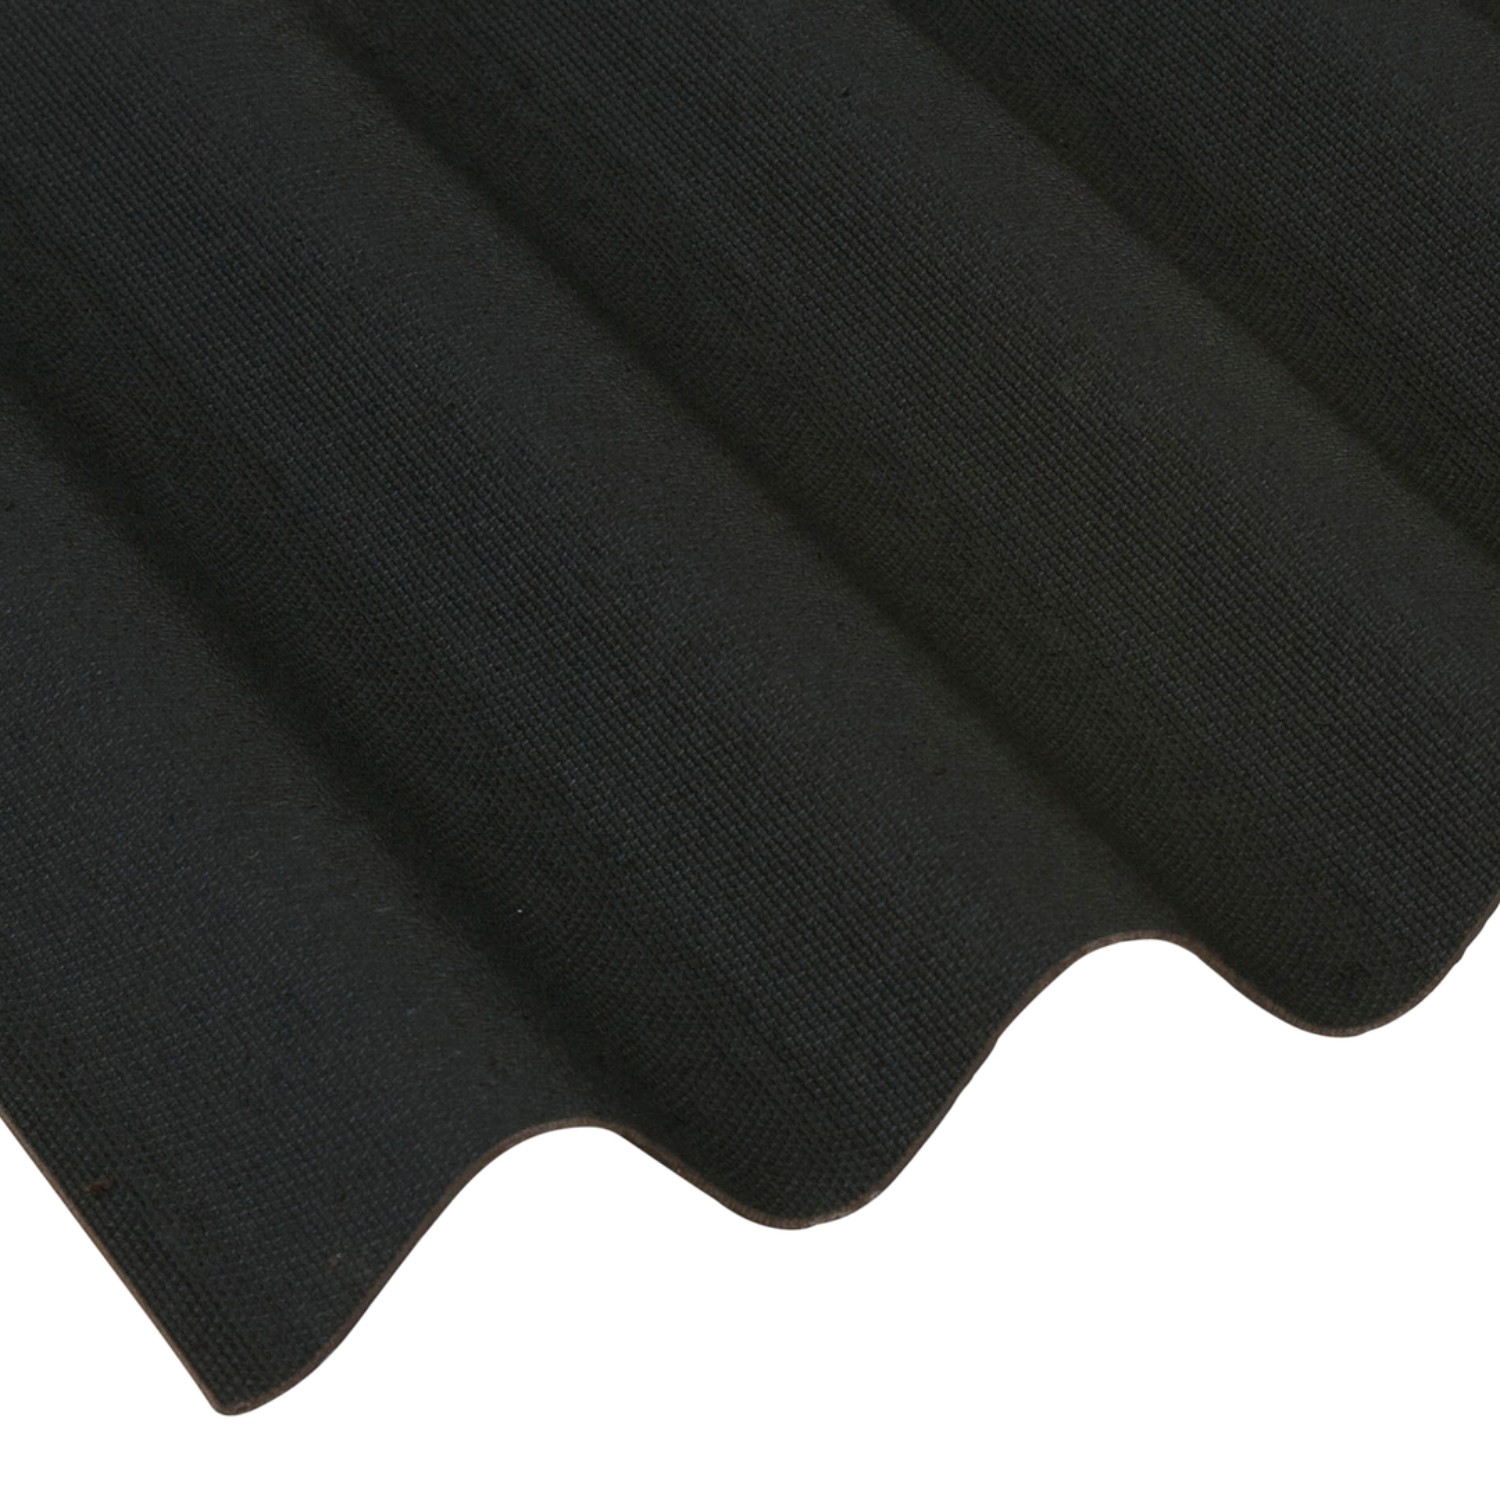 Onduline - Black Corrugated Bitumen Roof Sheet